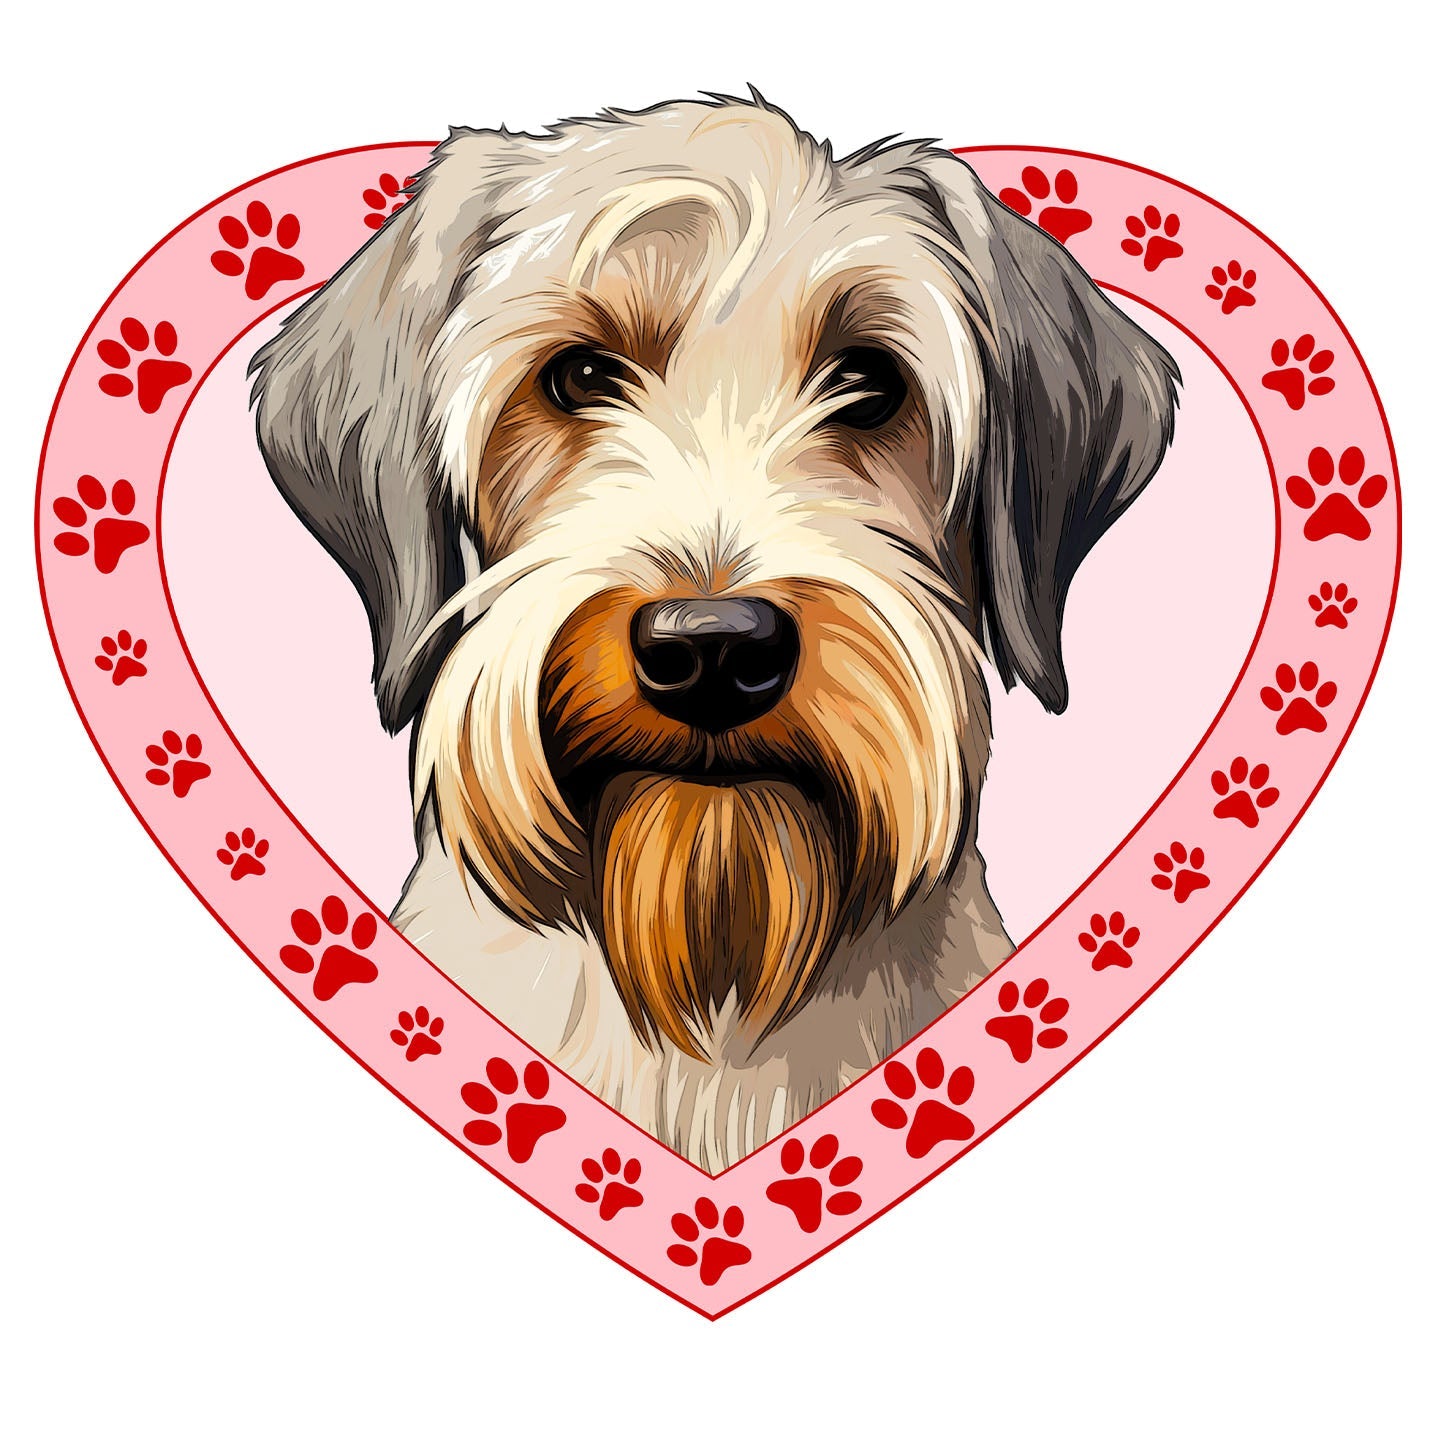 Sealyham Terrier Illustration In Heart - Adult Unisex T-Shirt